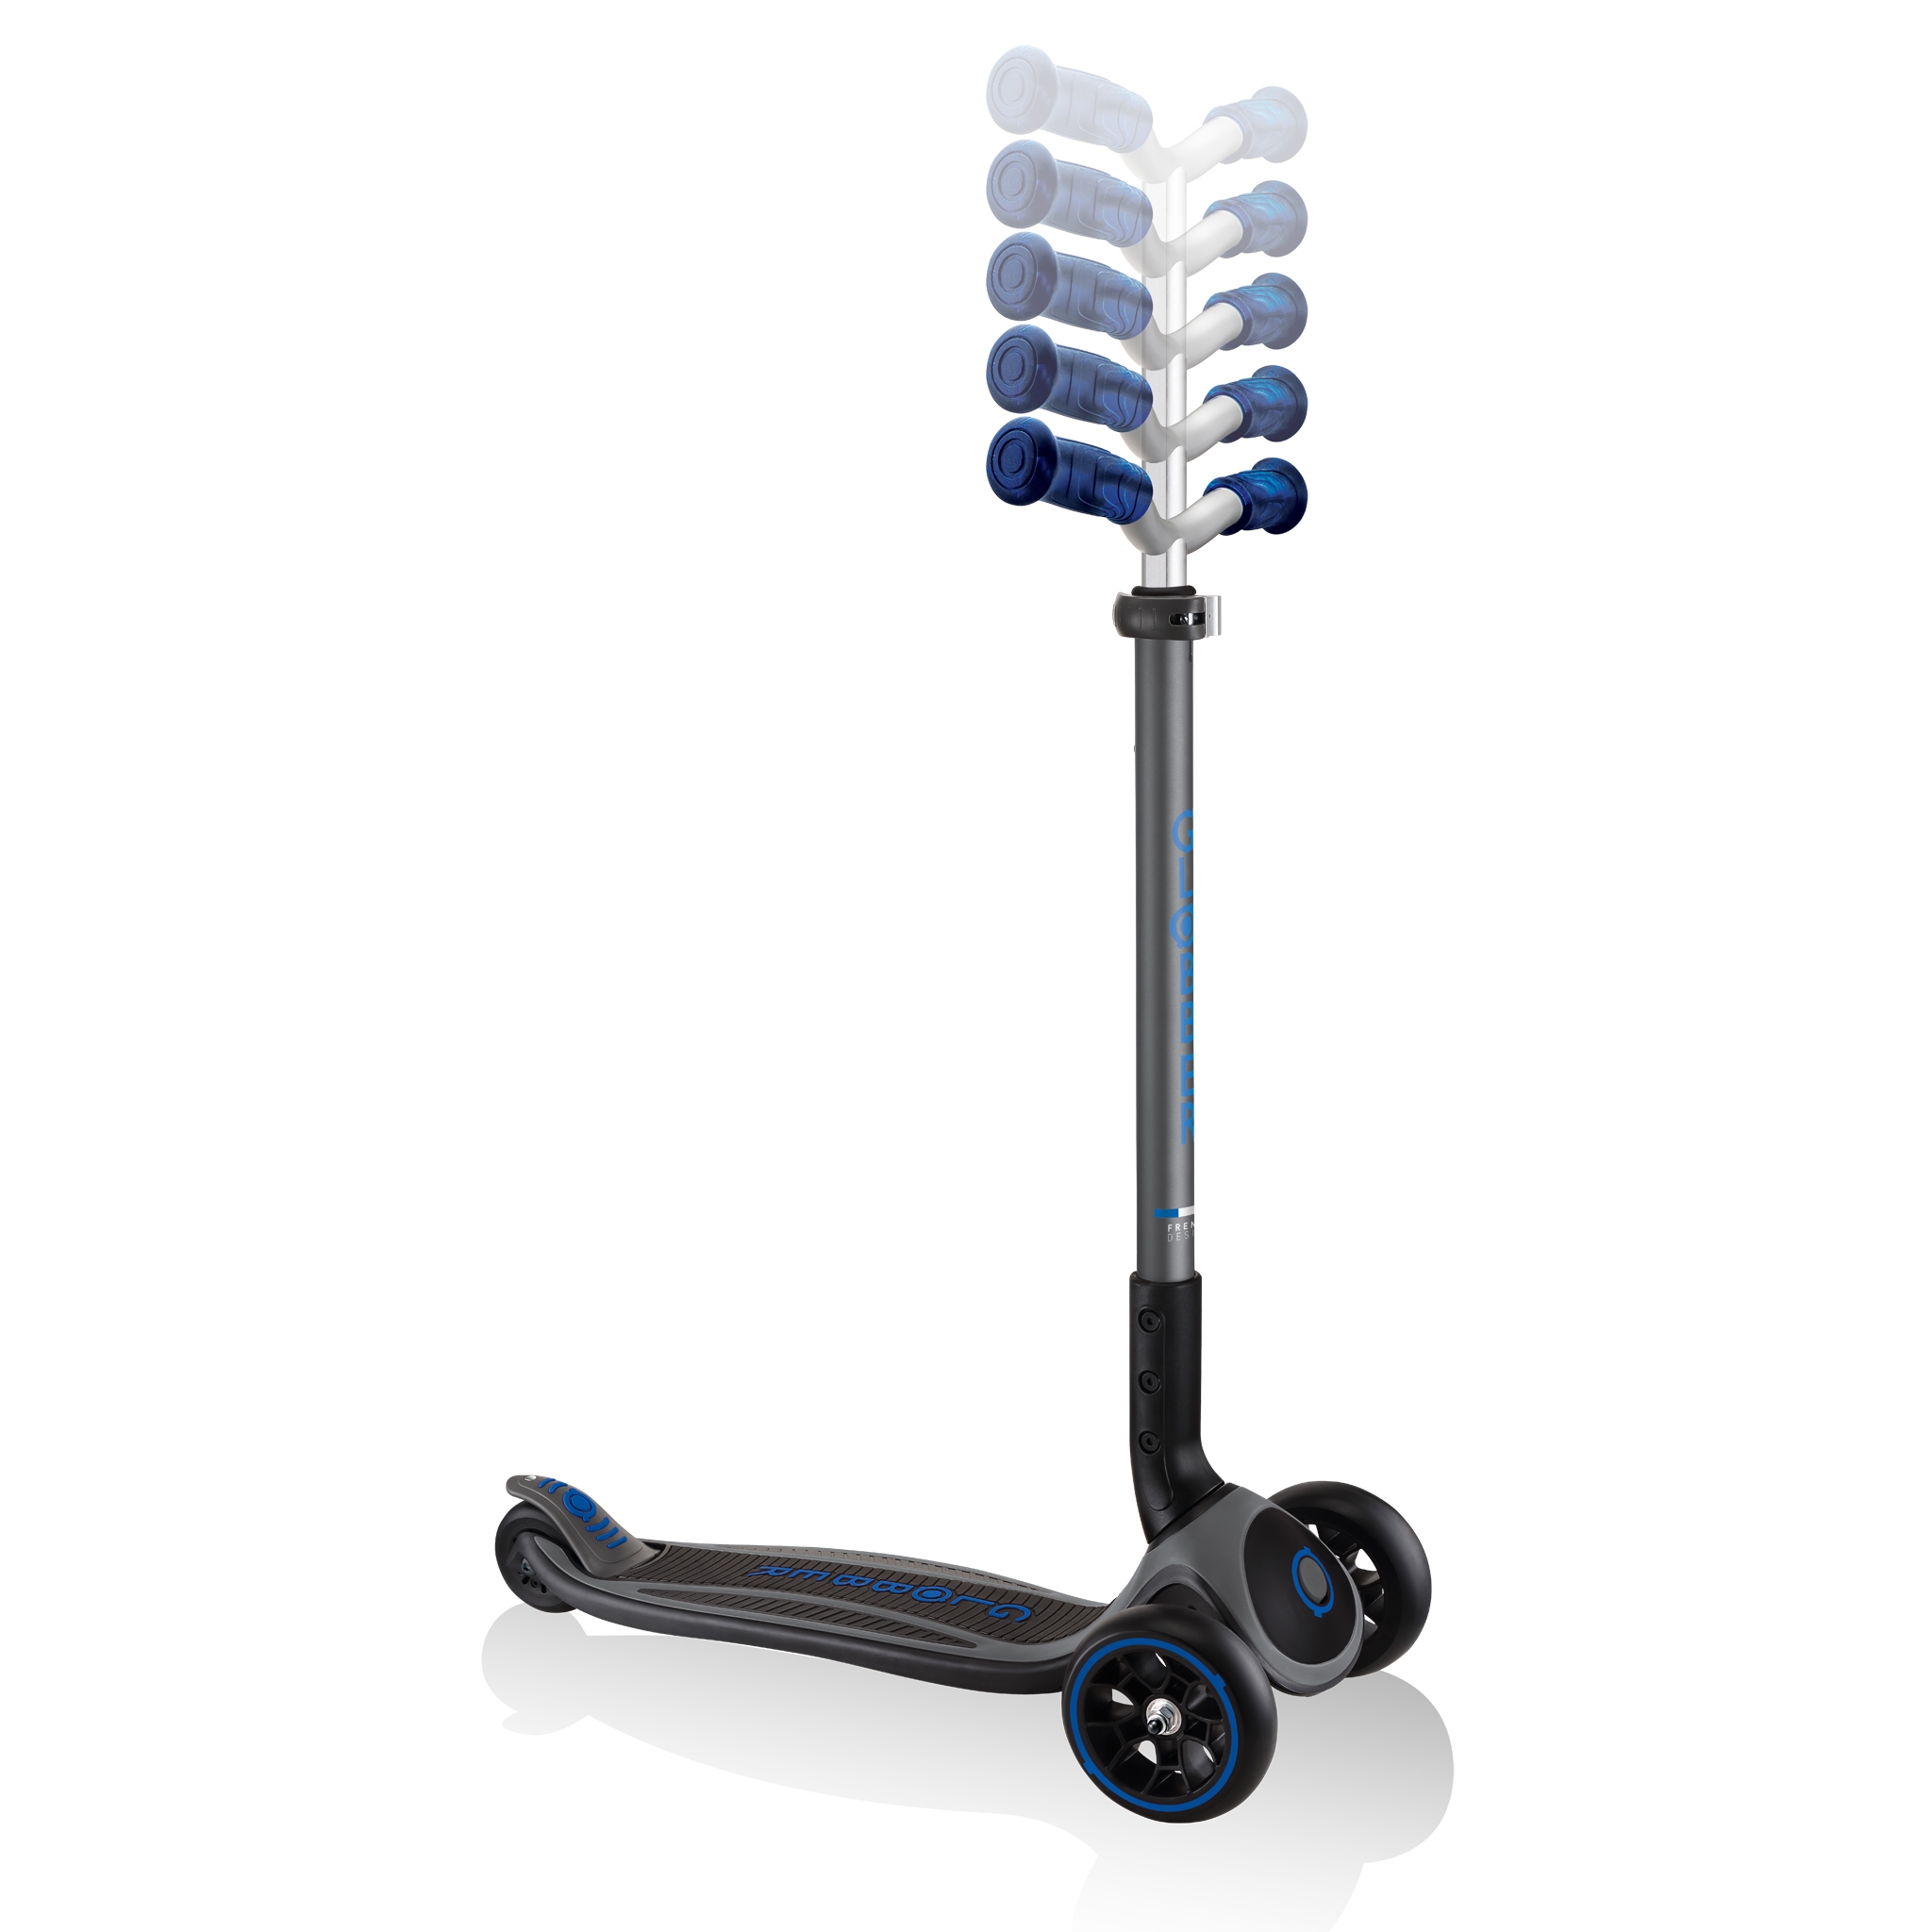 MASTER-PRIME-adjustable-large-3-wheel-kick-scooter 0